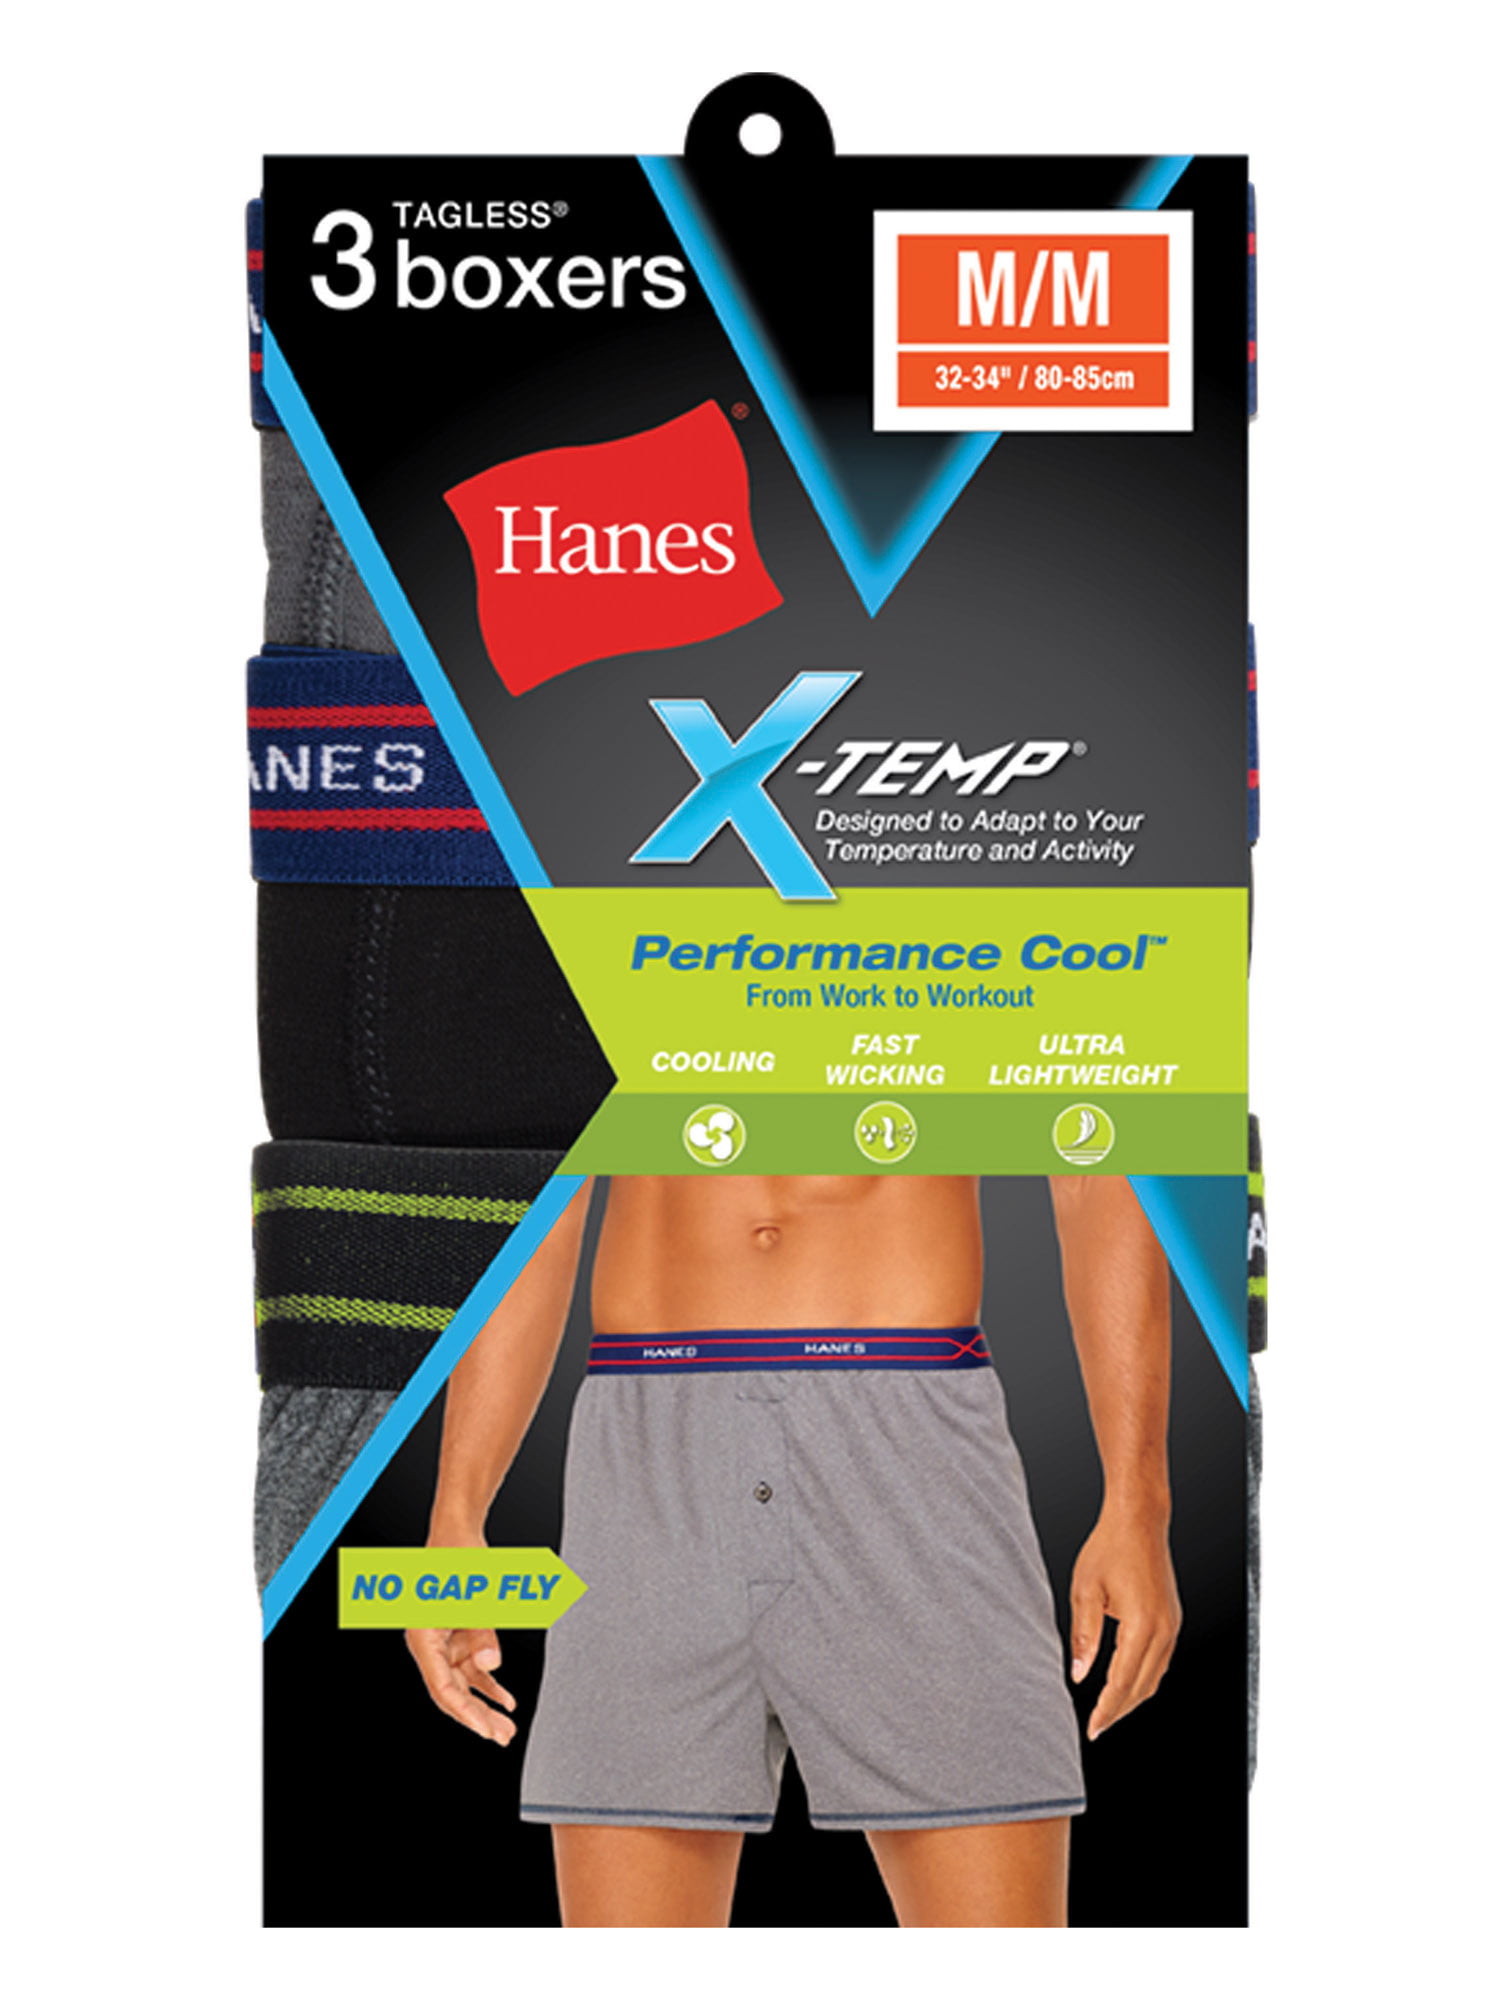 Hanes Premium PERFORMANCE COOL Boxer Briefs XTEMP Quick Drying breathable